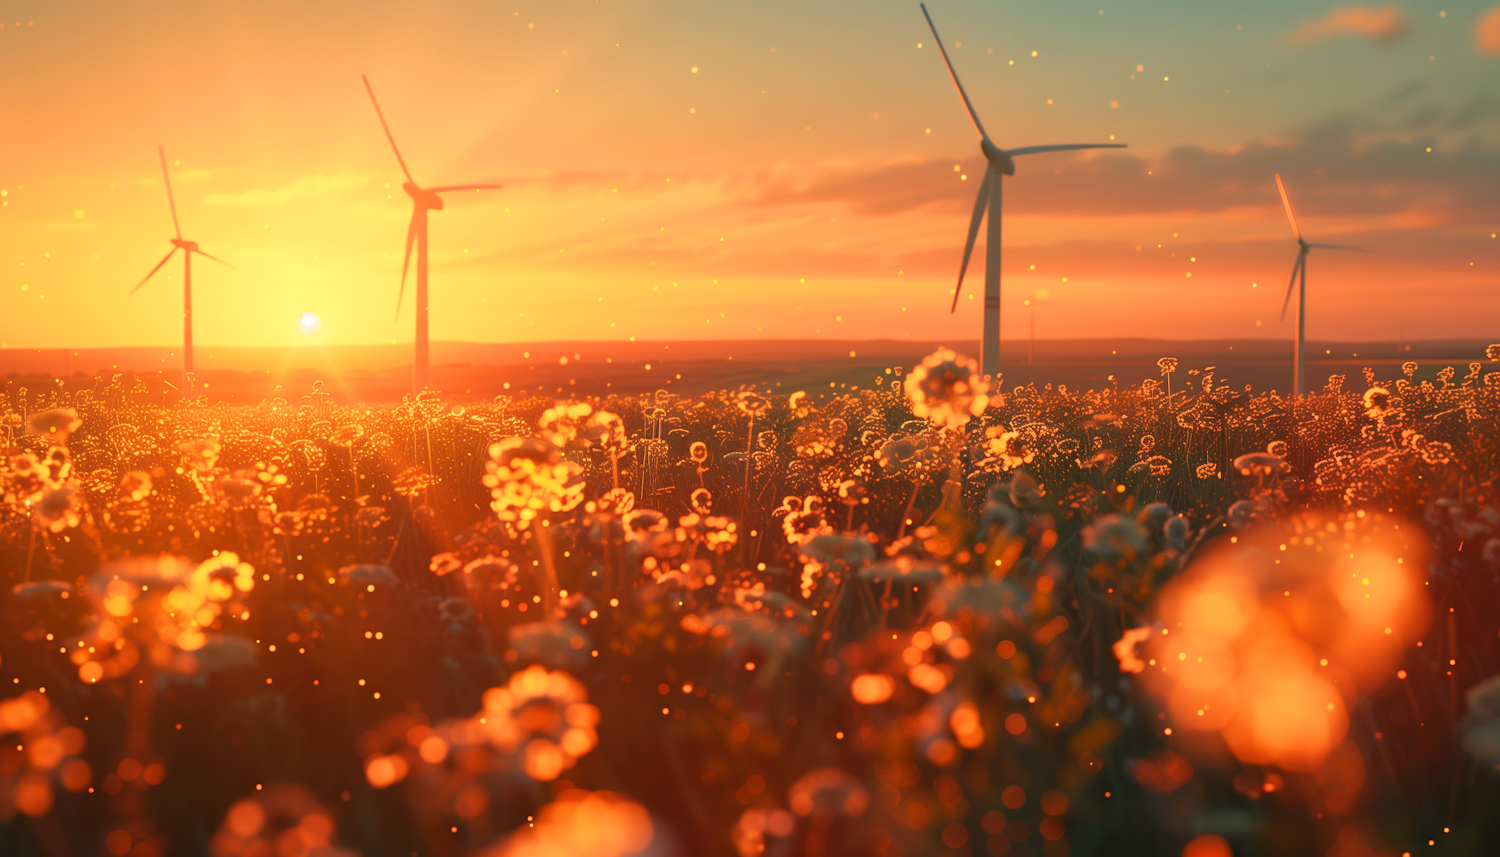 Sunset Flowers and Wind Turbines